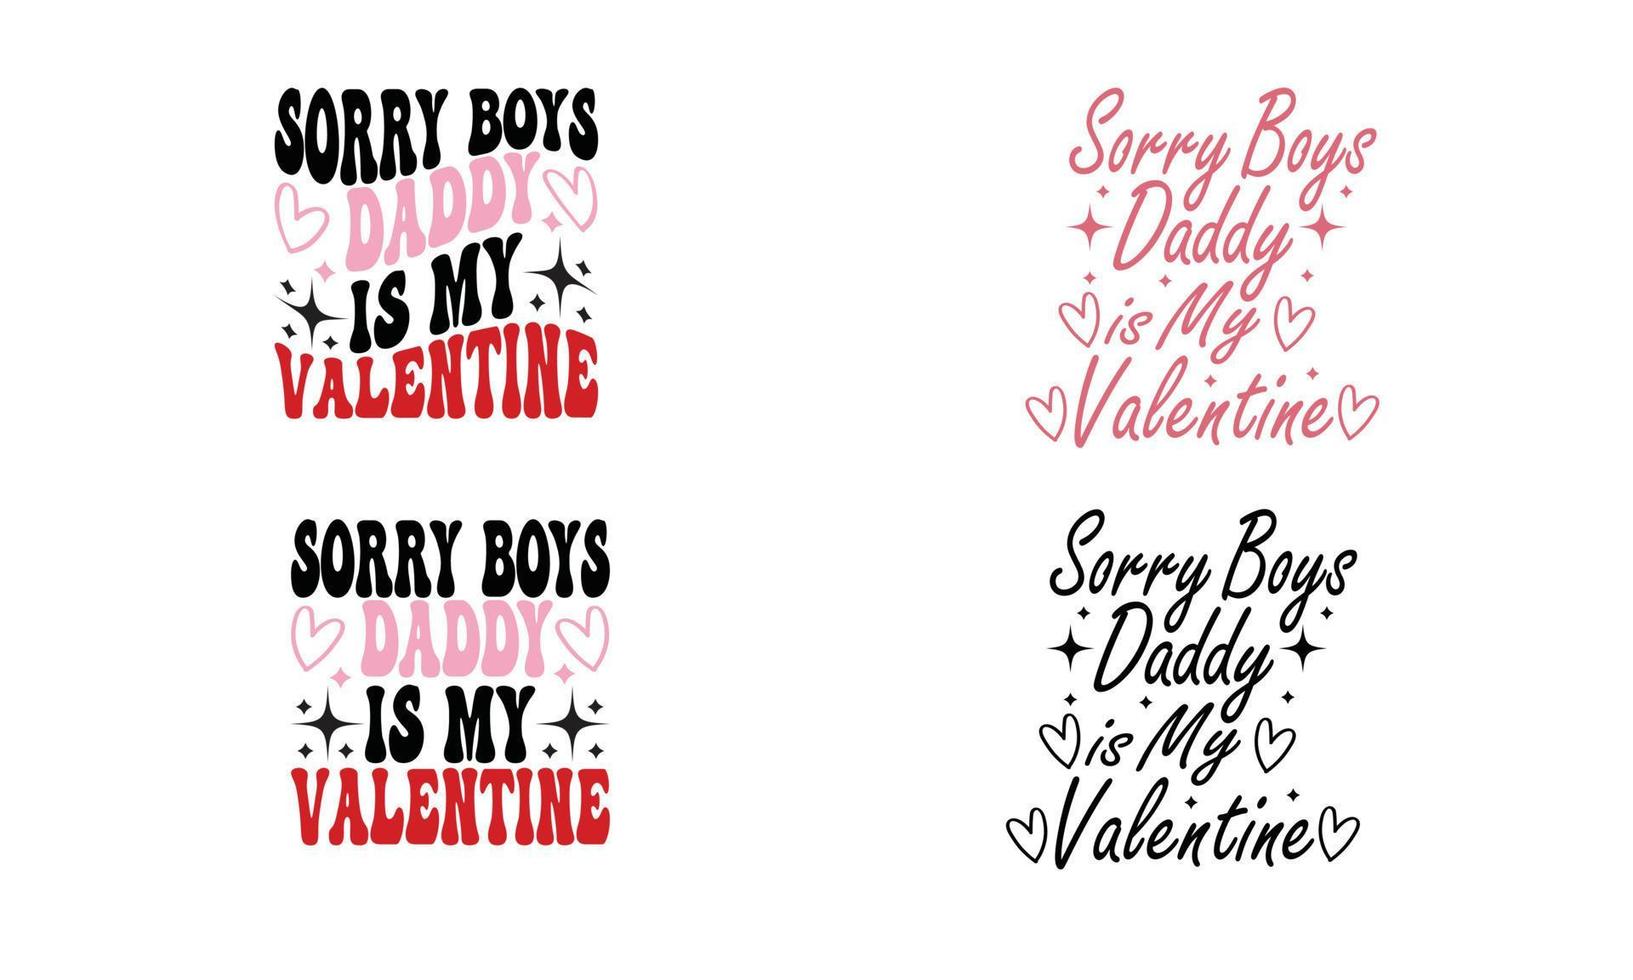 Sorry Boys Daddy is My Valentine Design. vector